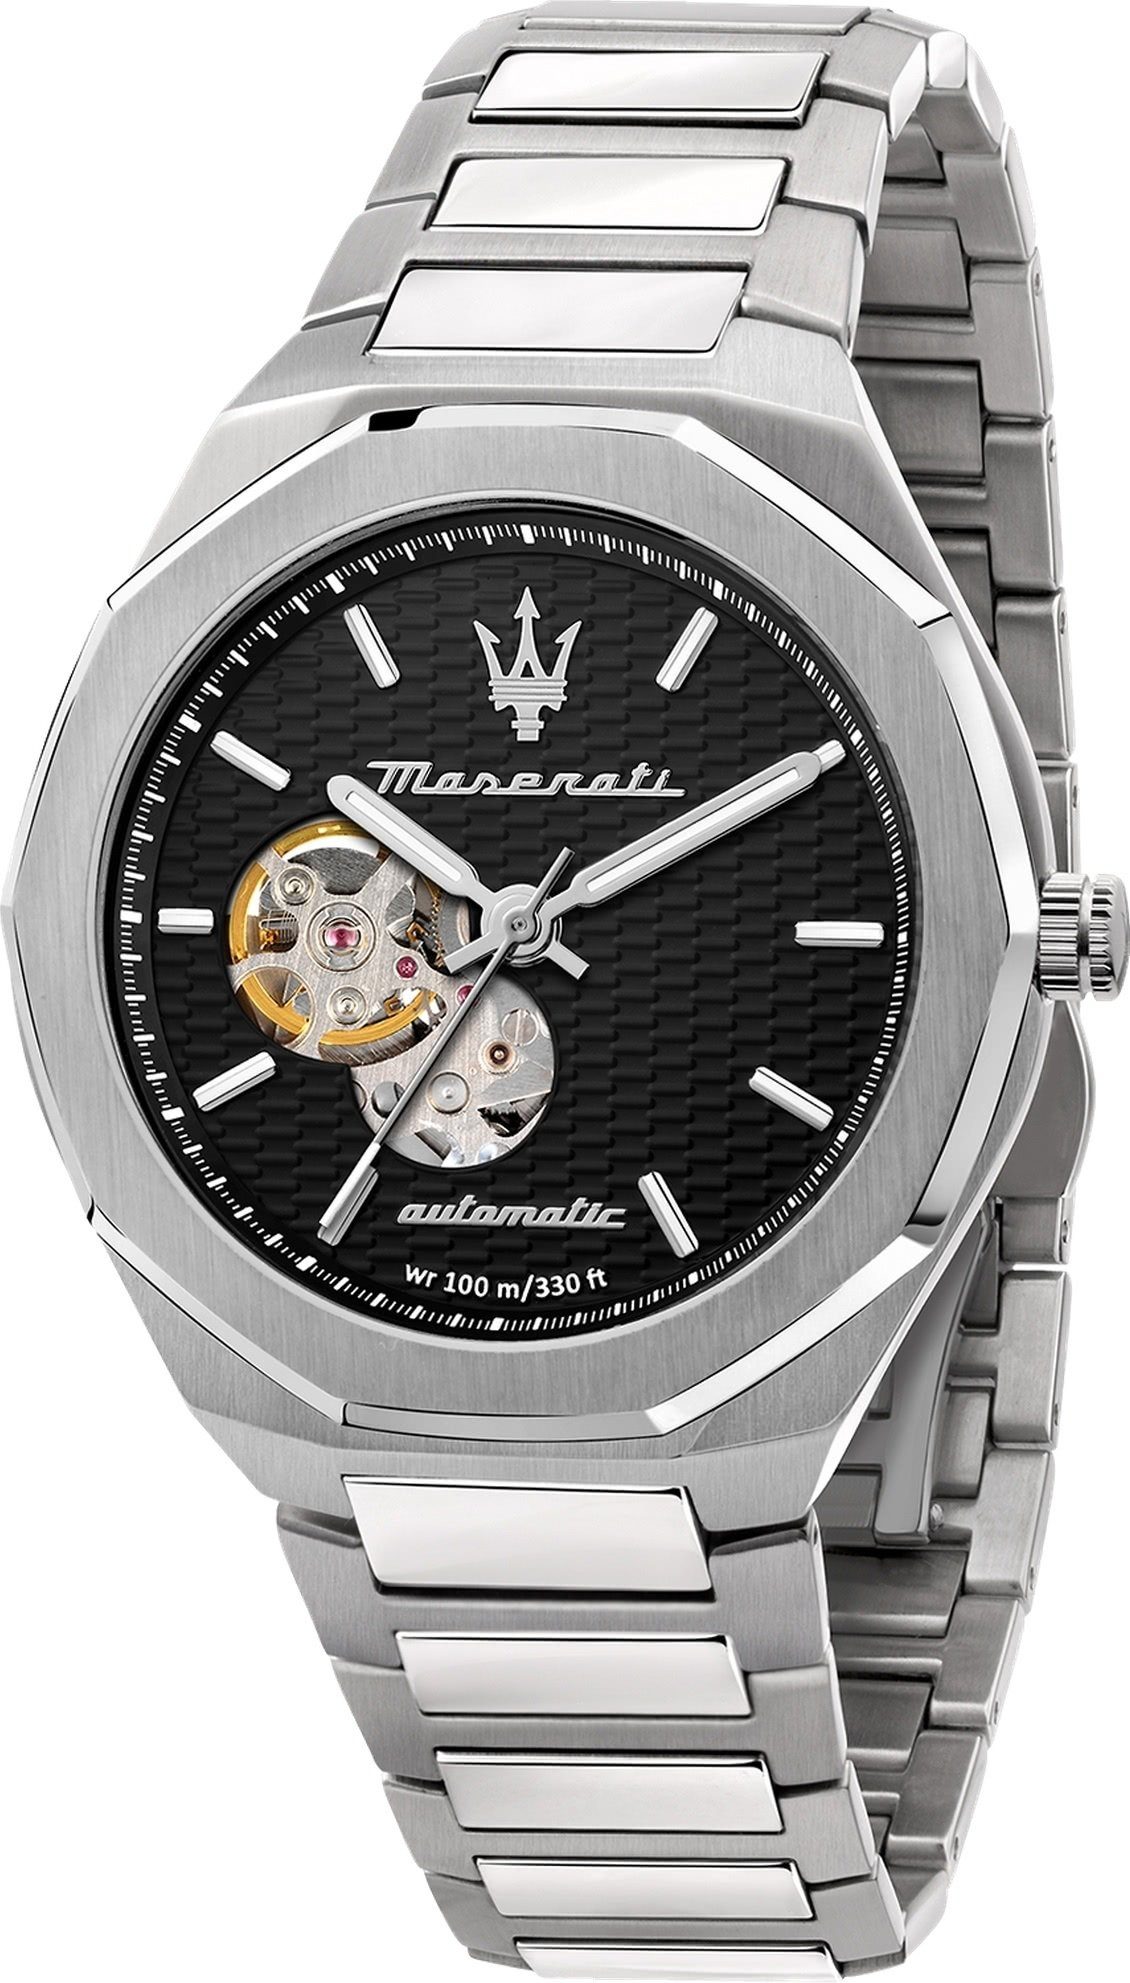 MASERATI Quarzuhr Maserati Herren Uhr Analog STILE, Herrenuhr rund, groß (ca. 42mm) Edelstahlarmband, Made-In Italy